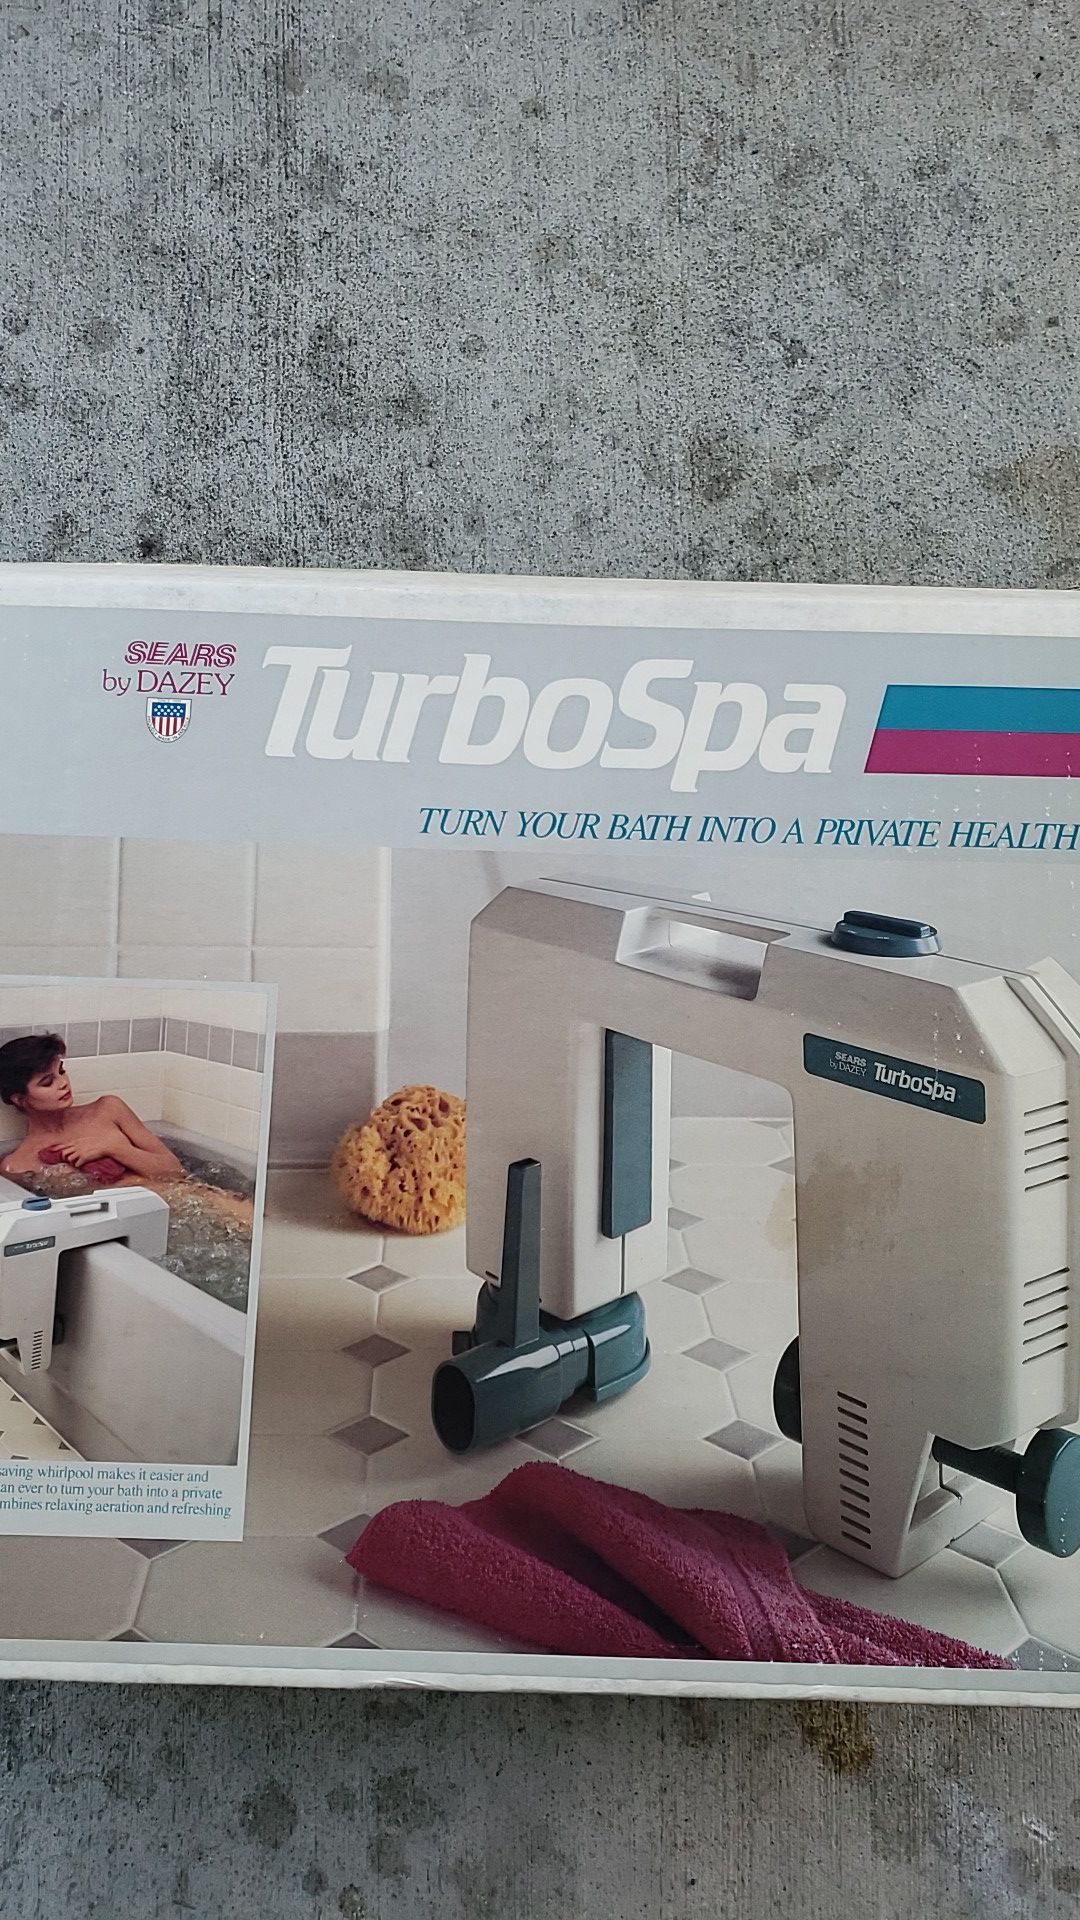 Turbospa turn your bath into a private health club